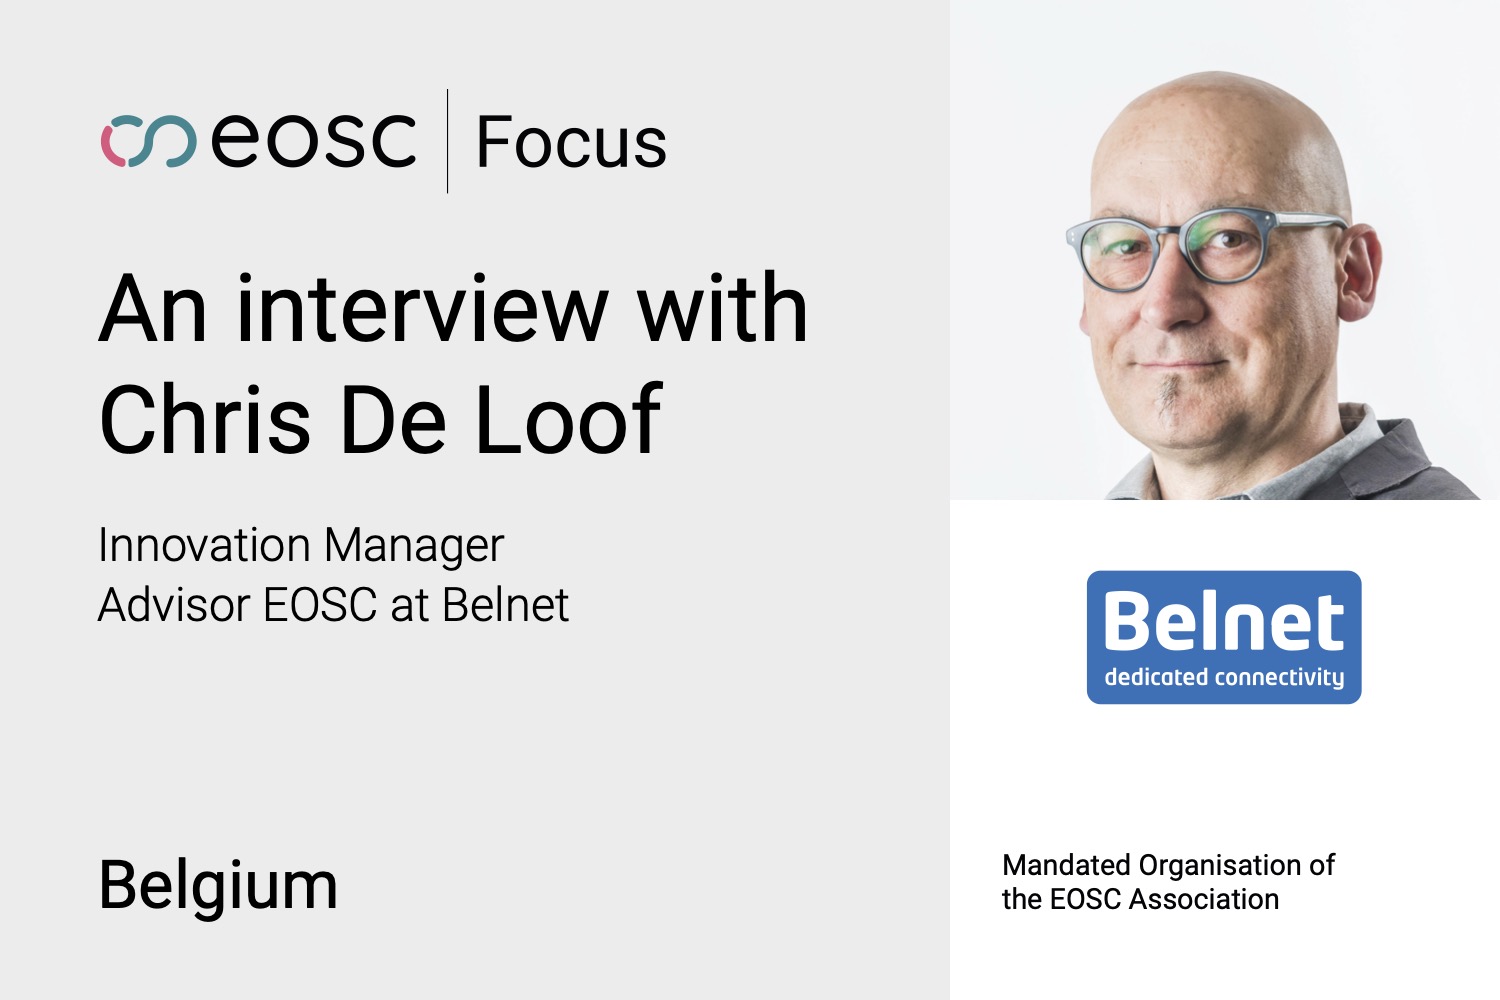 EOSC Focus Project - EOSC Association